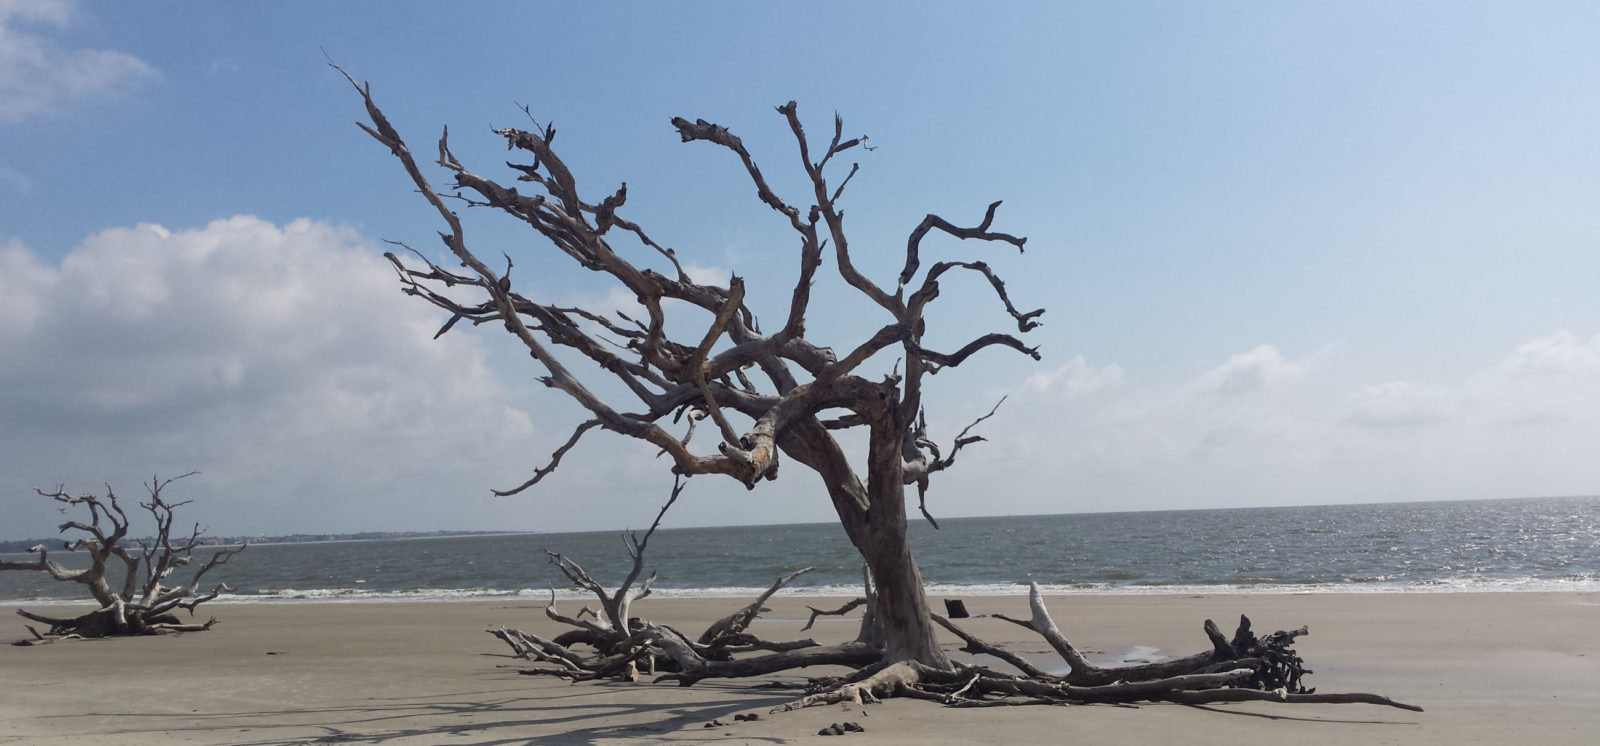 Tree on beach killed by salt water